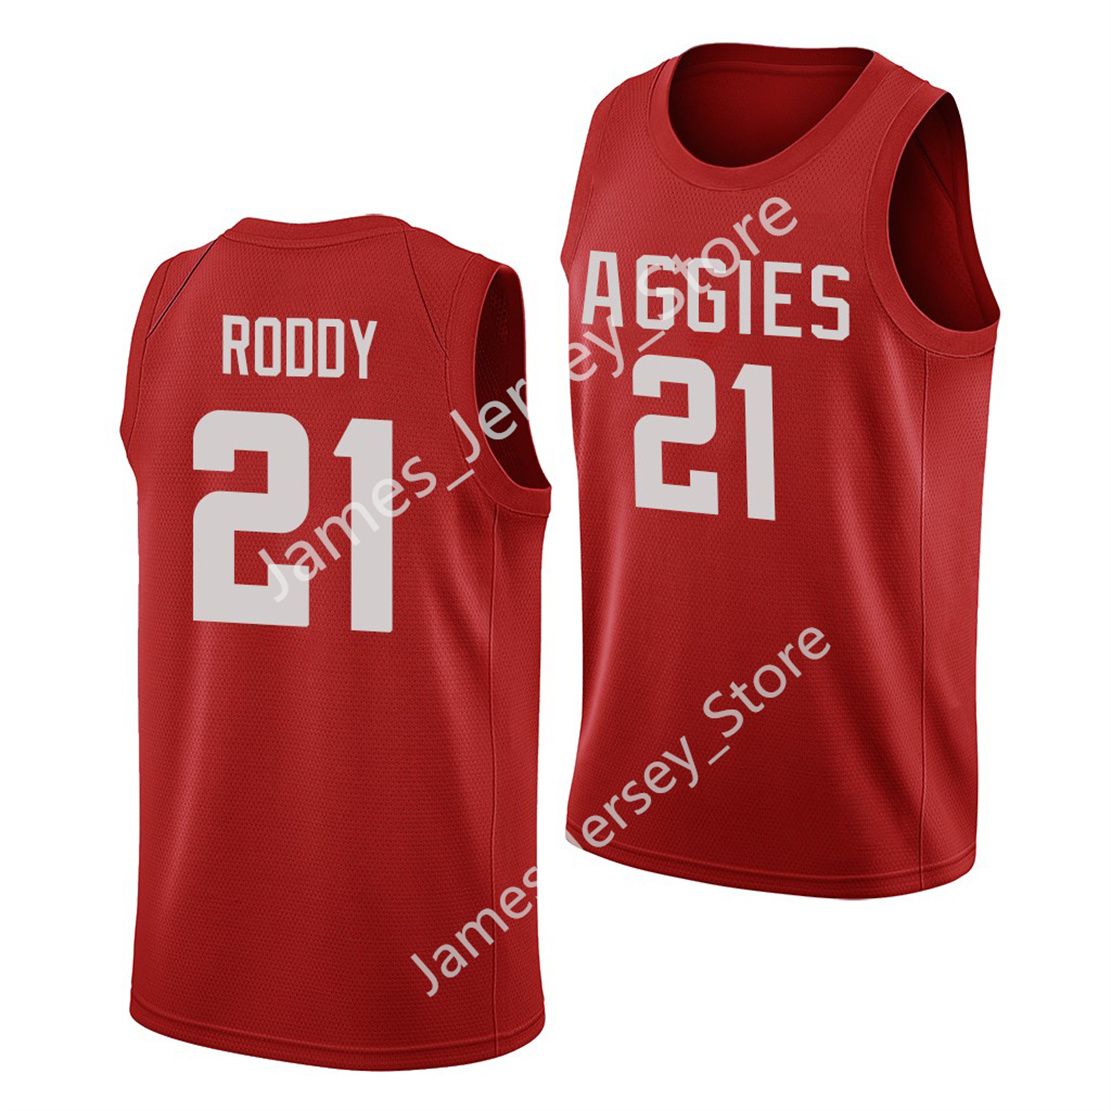 21 David Roddy Basketball Jersey